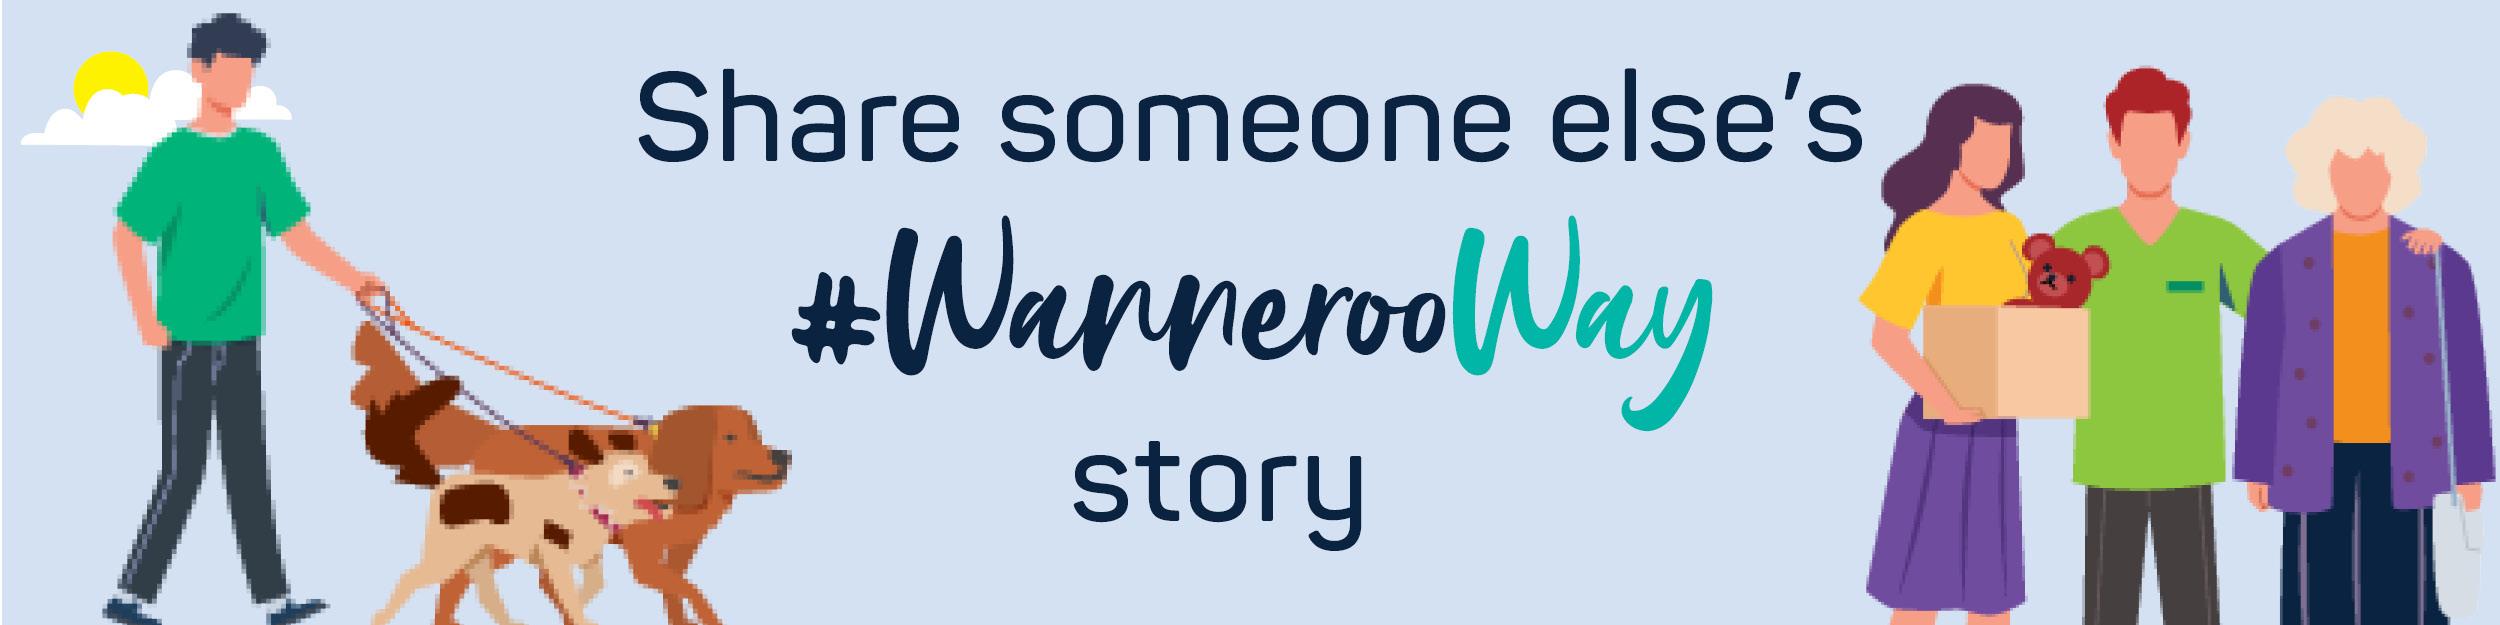 Wanneroo Way Small web banners 2